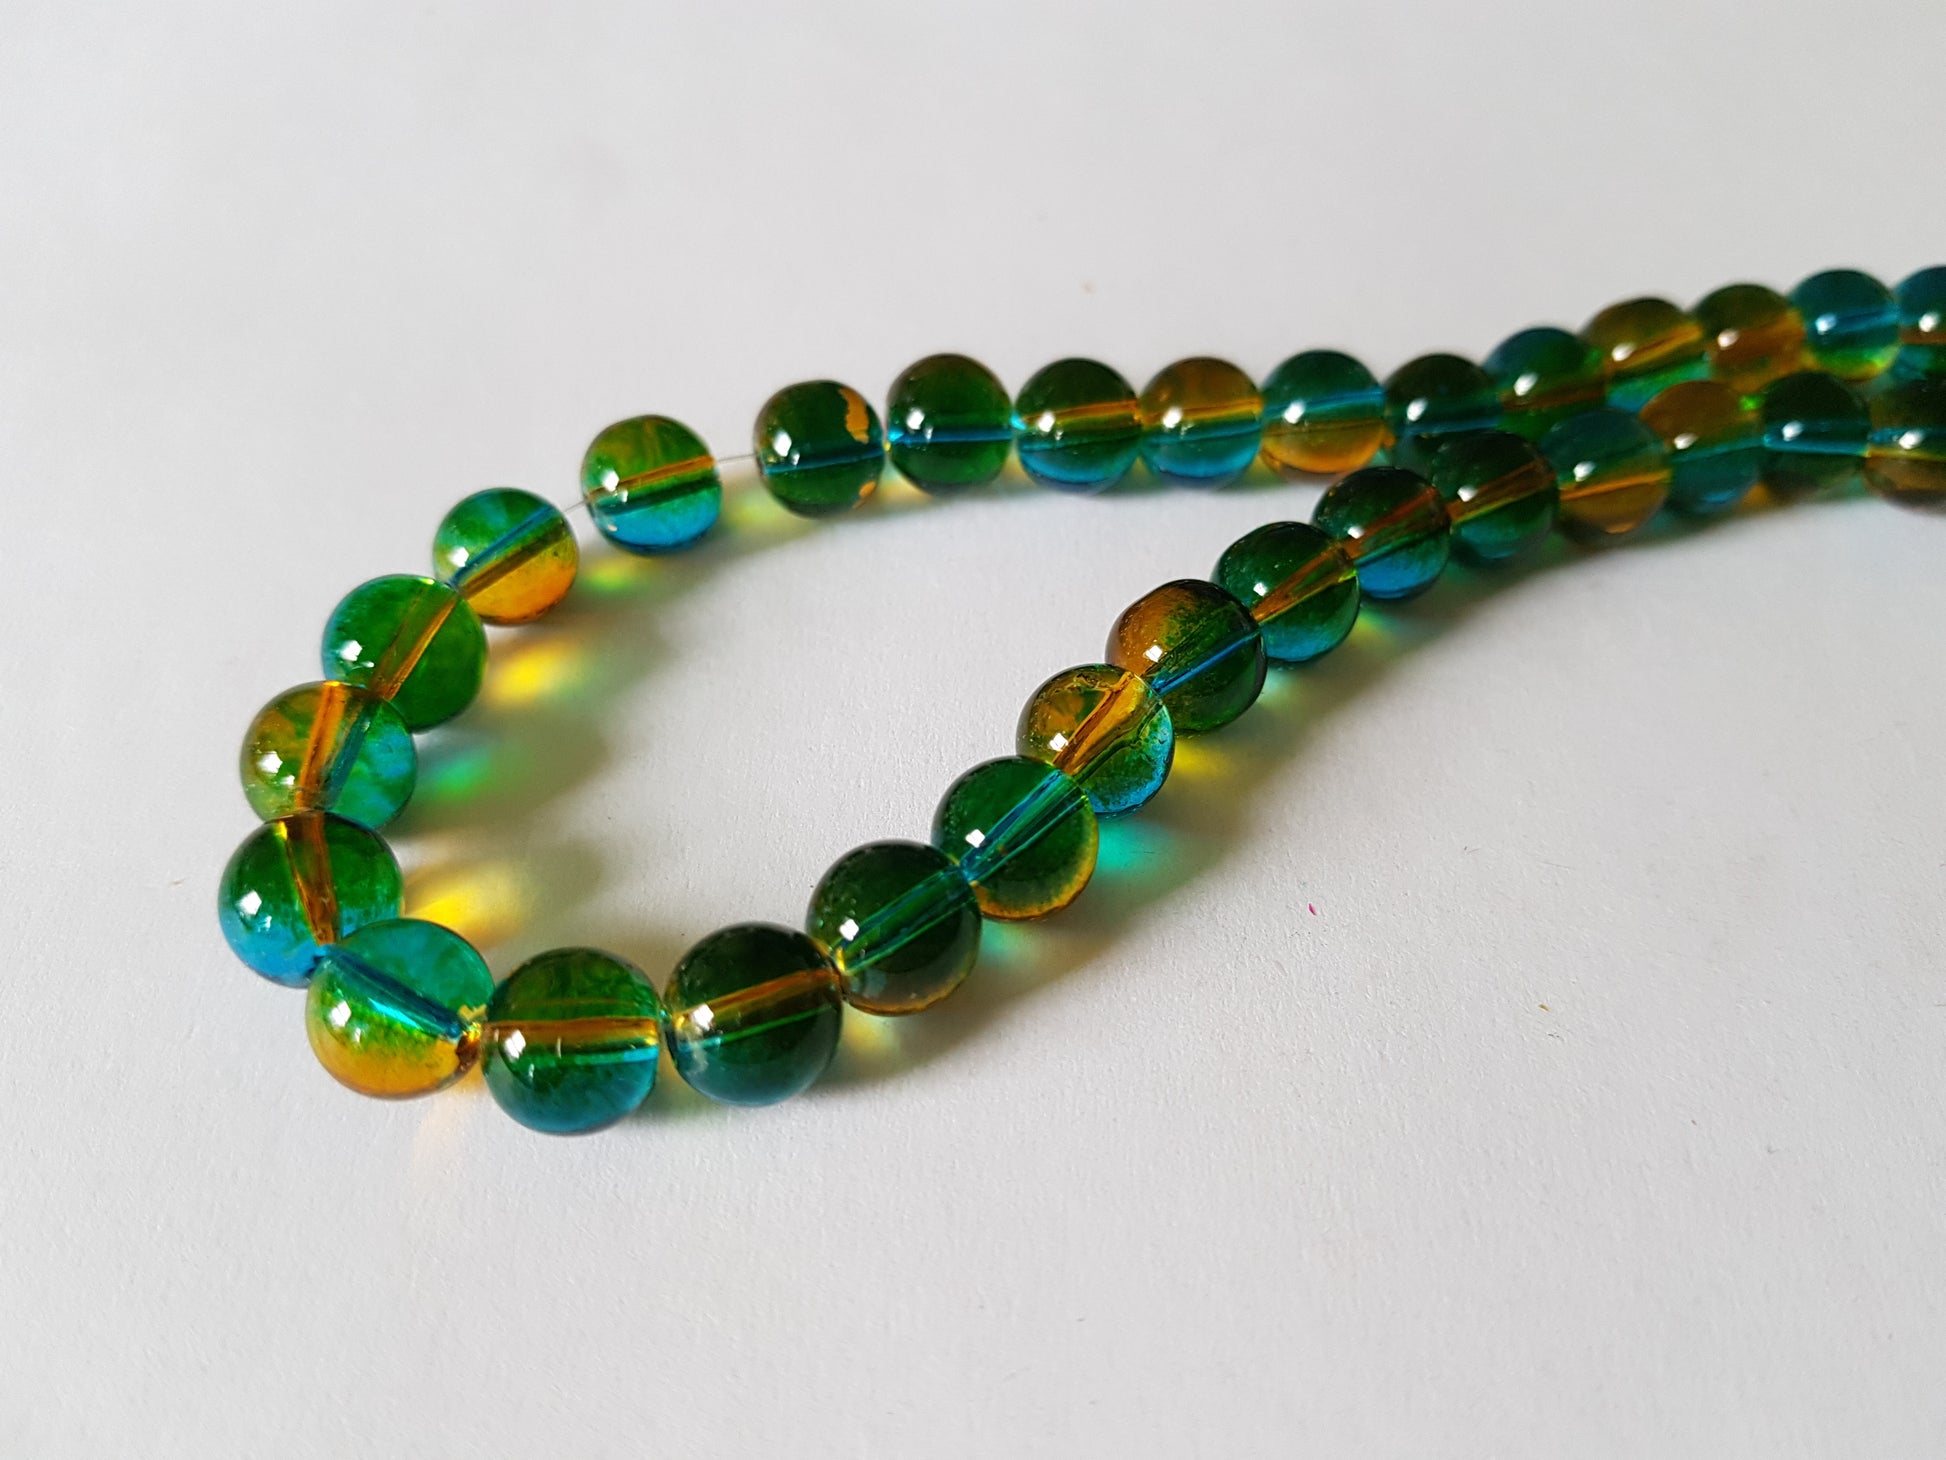 8mm 2-tone round glass beads - blue/green/orange 